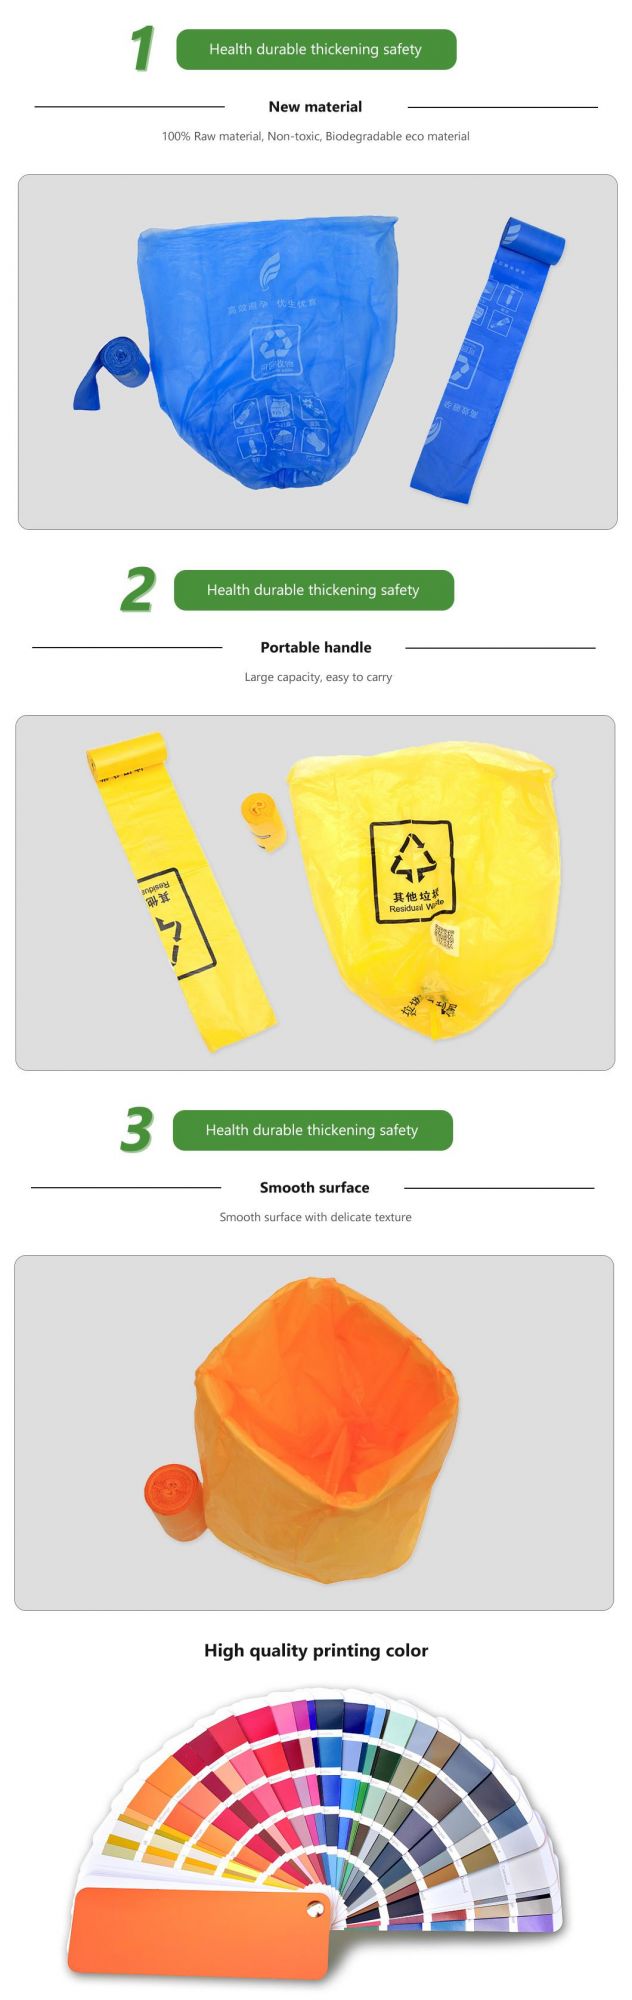 PLA+Pbat/Pbat+Corn Starch Biodegradable Bags, Compostable Bags, Rubbish Bags for Supermarket